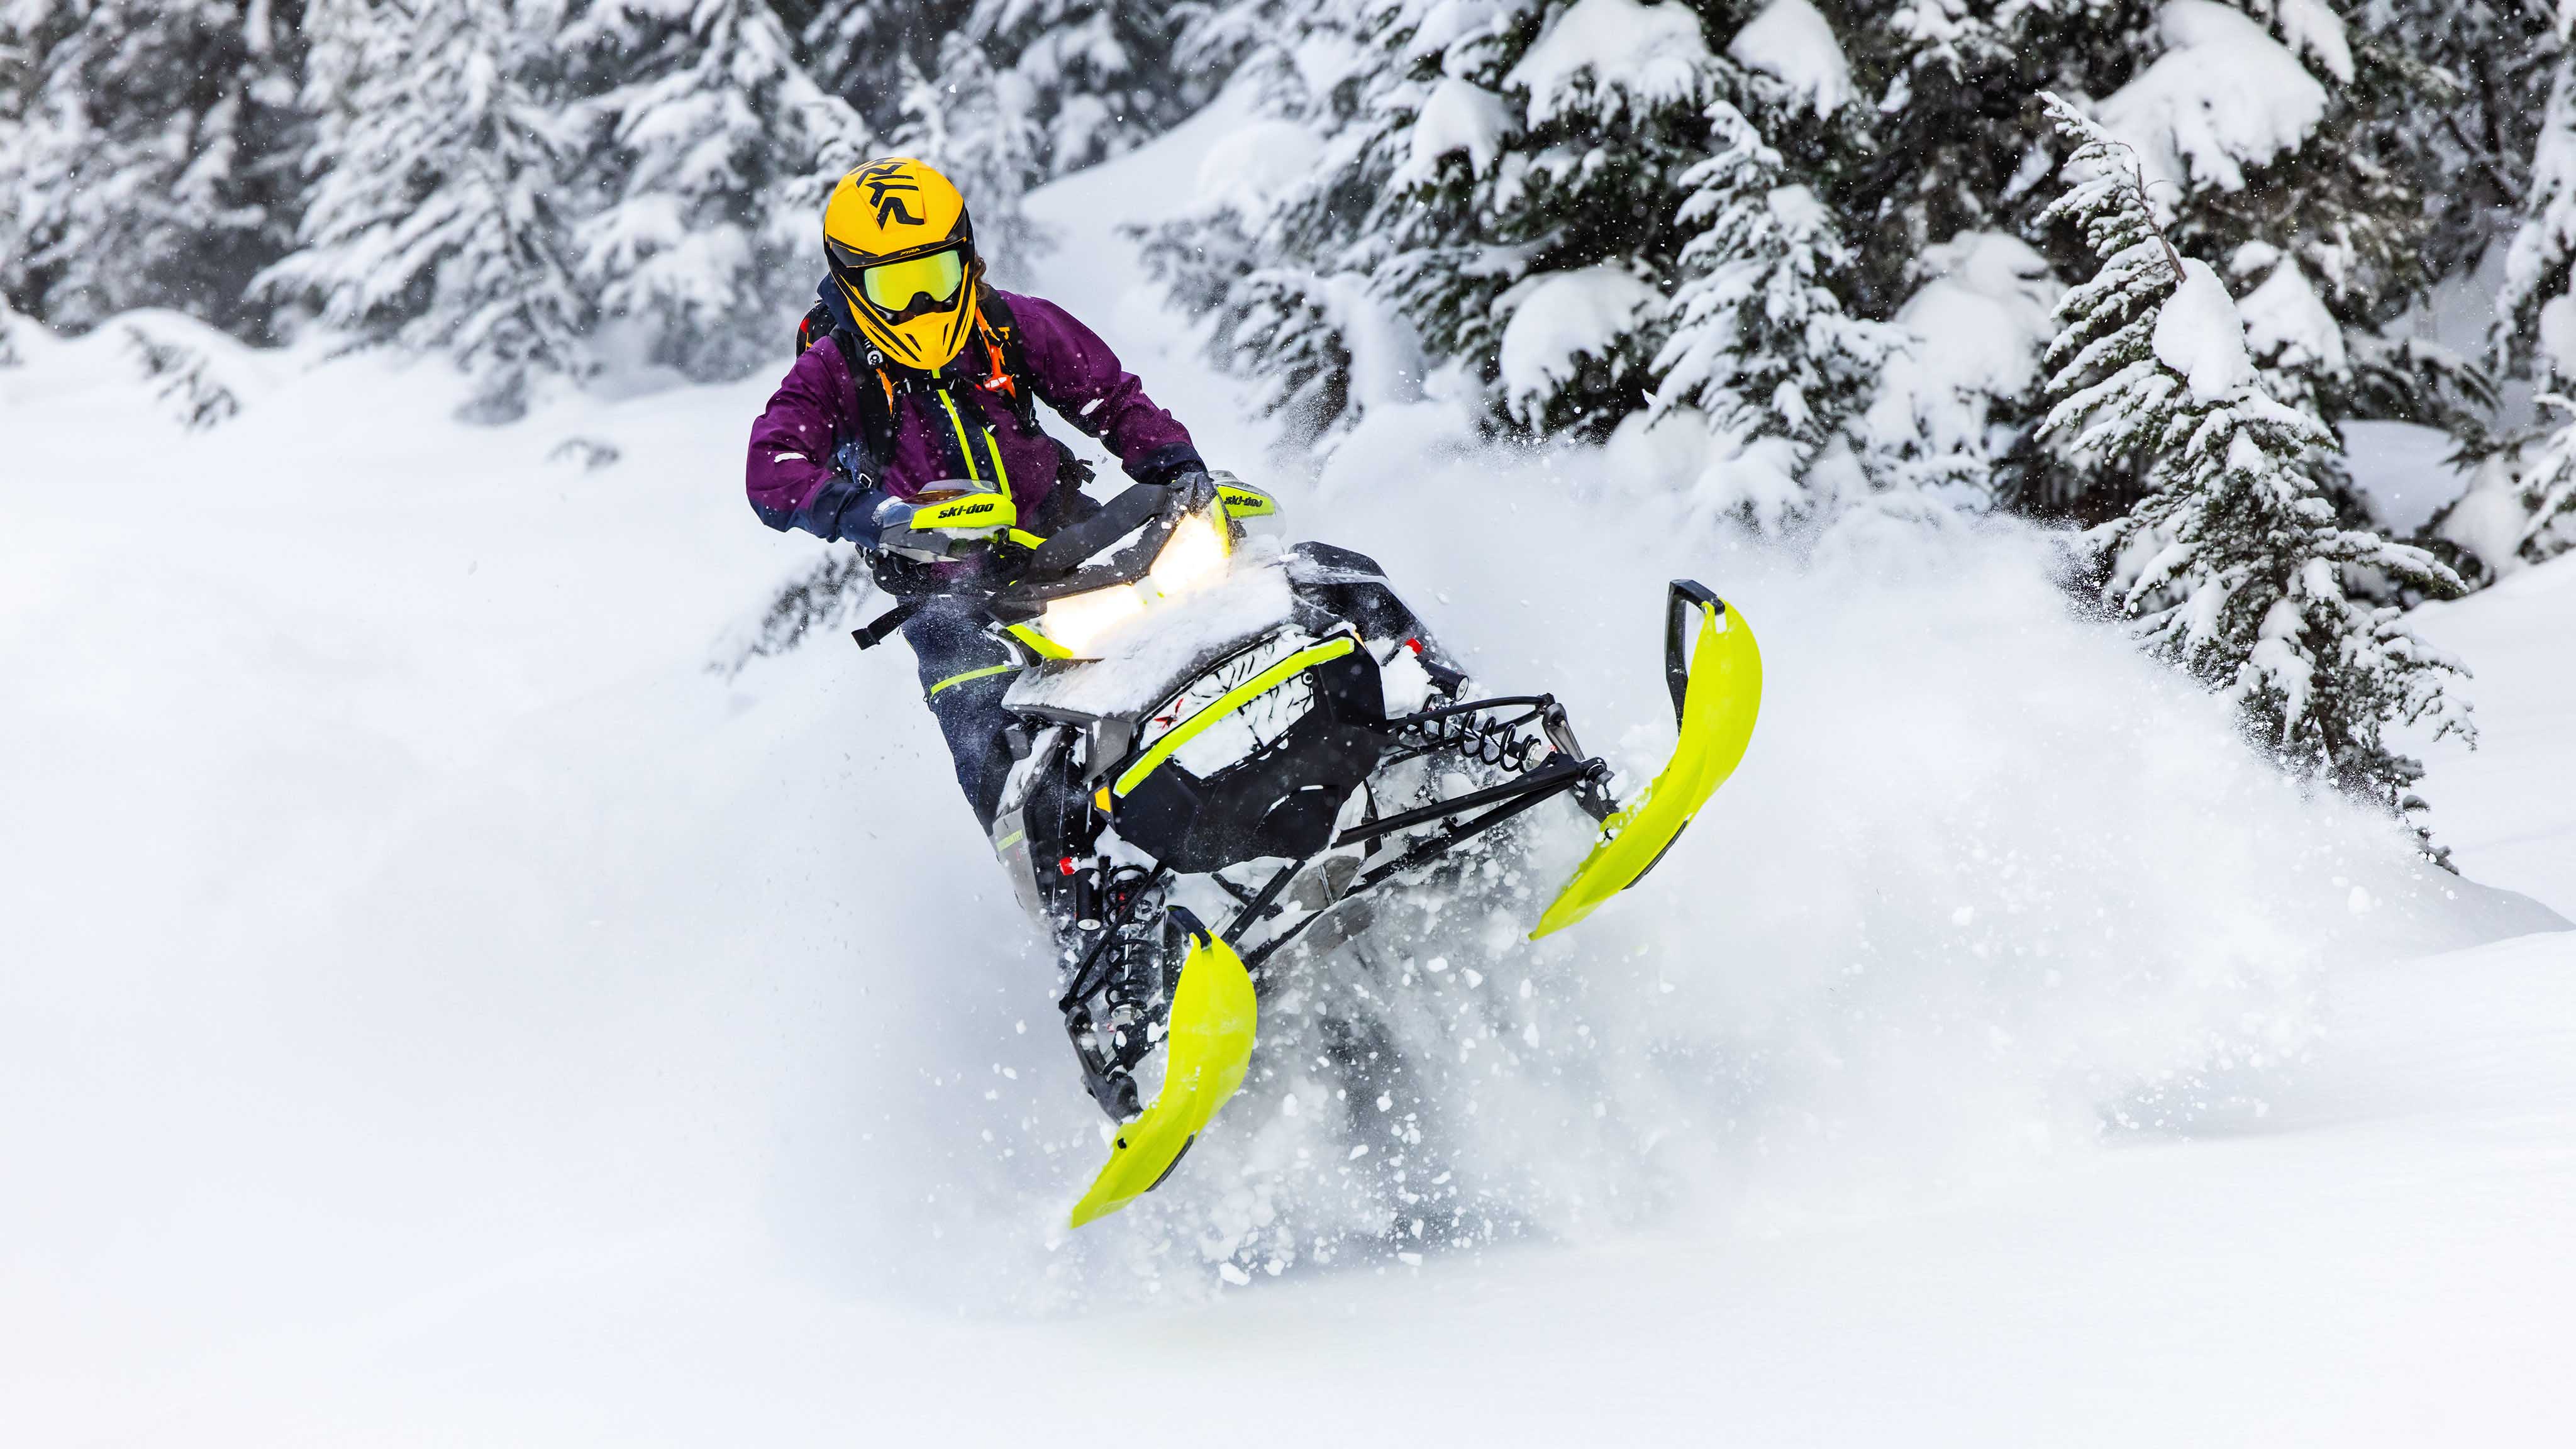 Femme pilotant dans la neige profonde avec une motoneige Hybride Ski-Doo